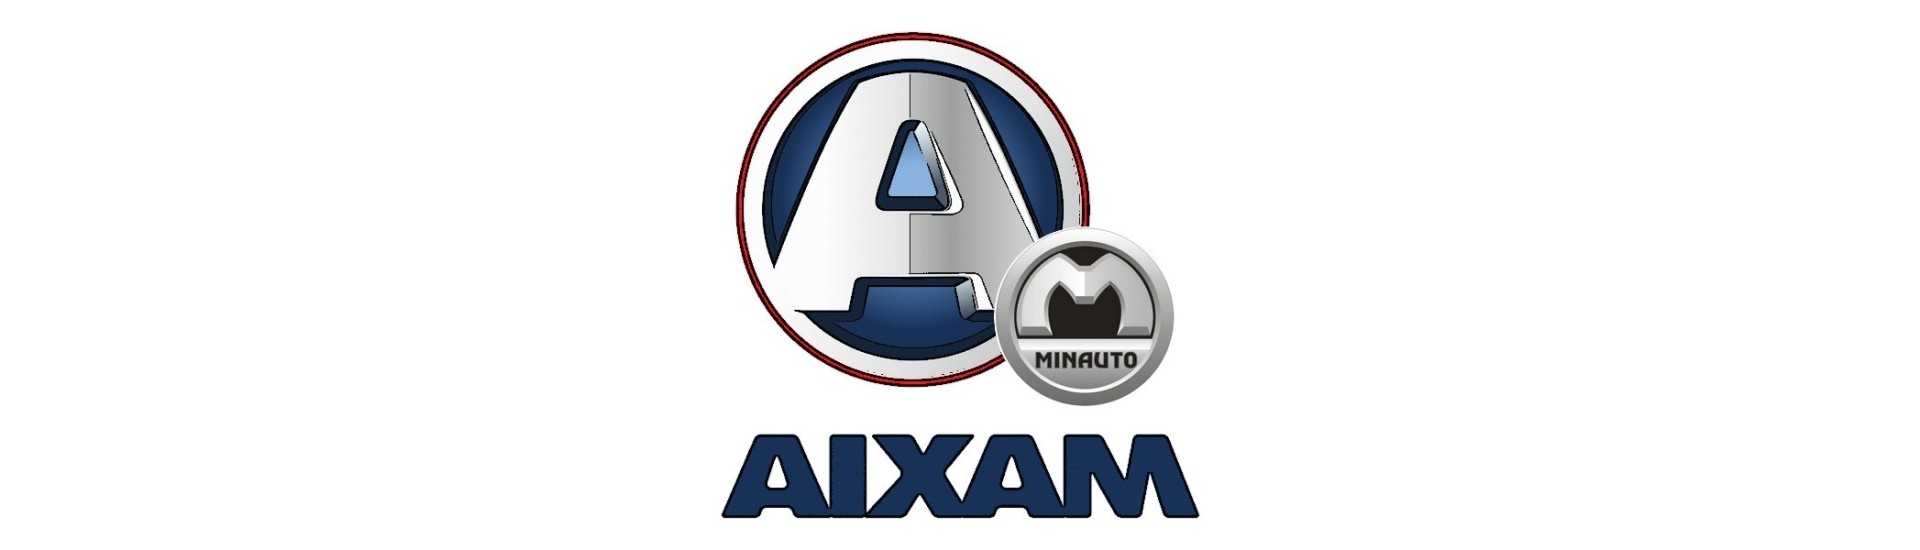 Car Heating Radiator without a permit Aixam Minauto